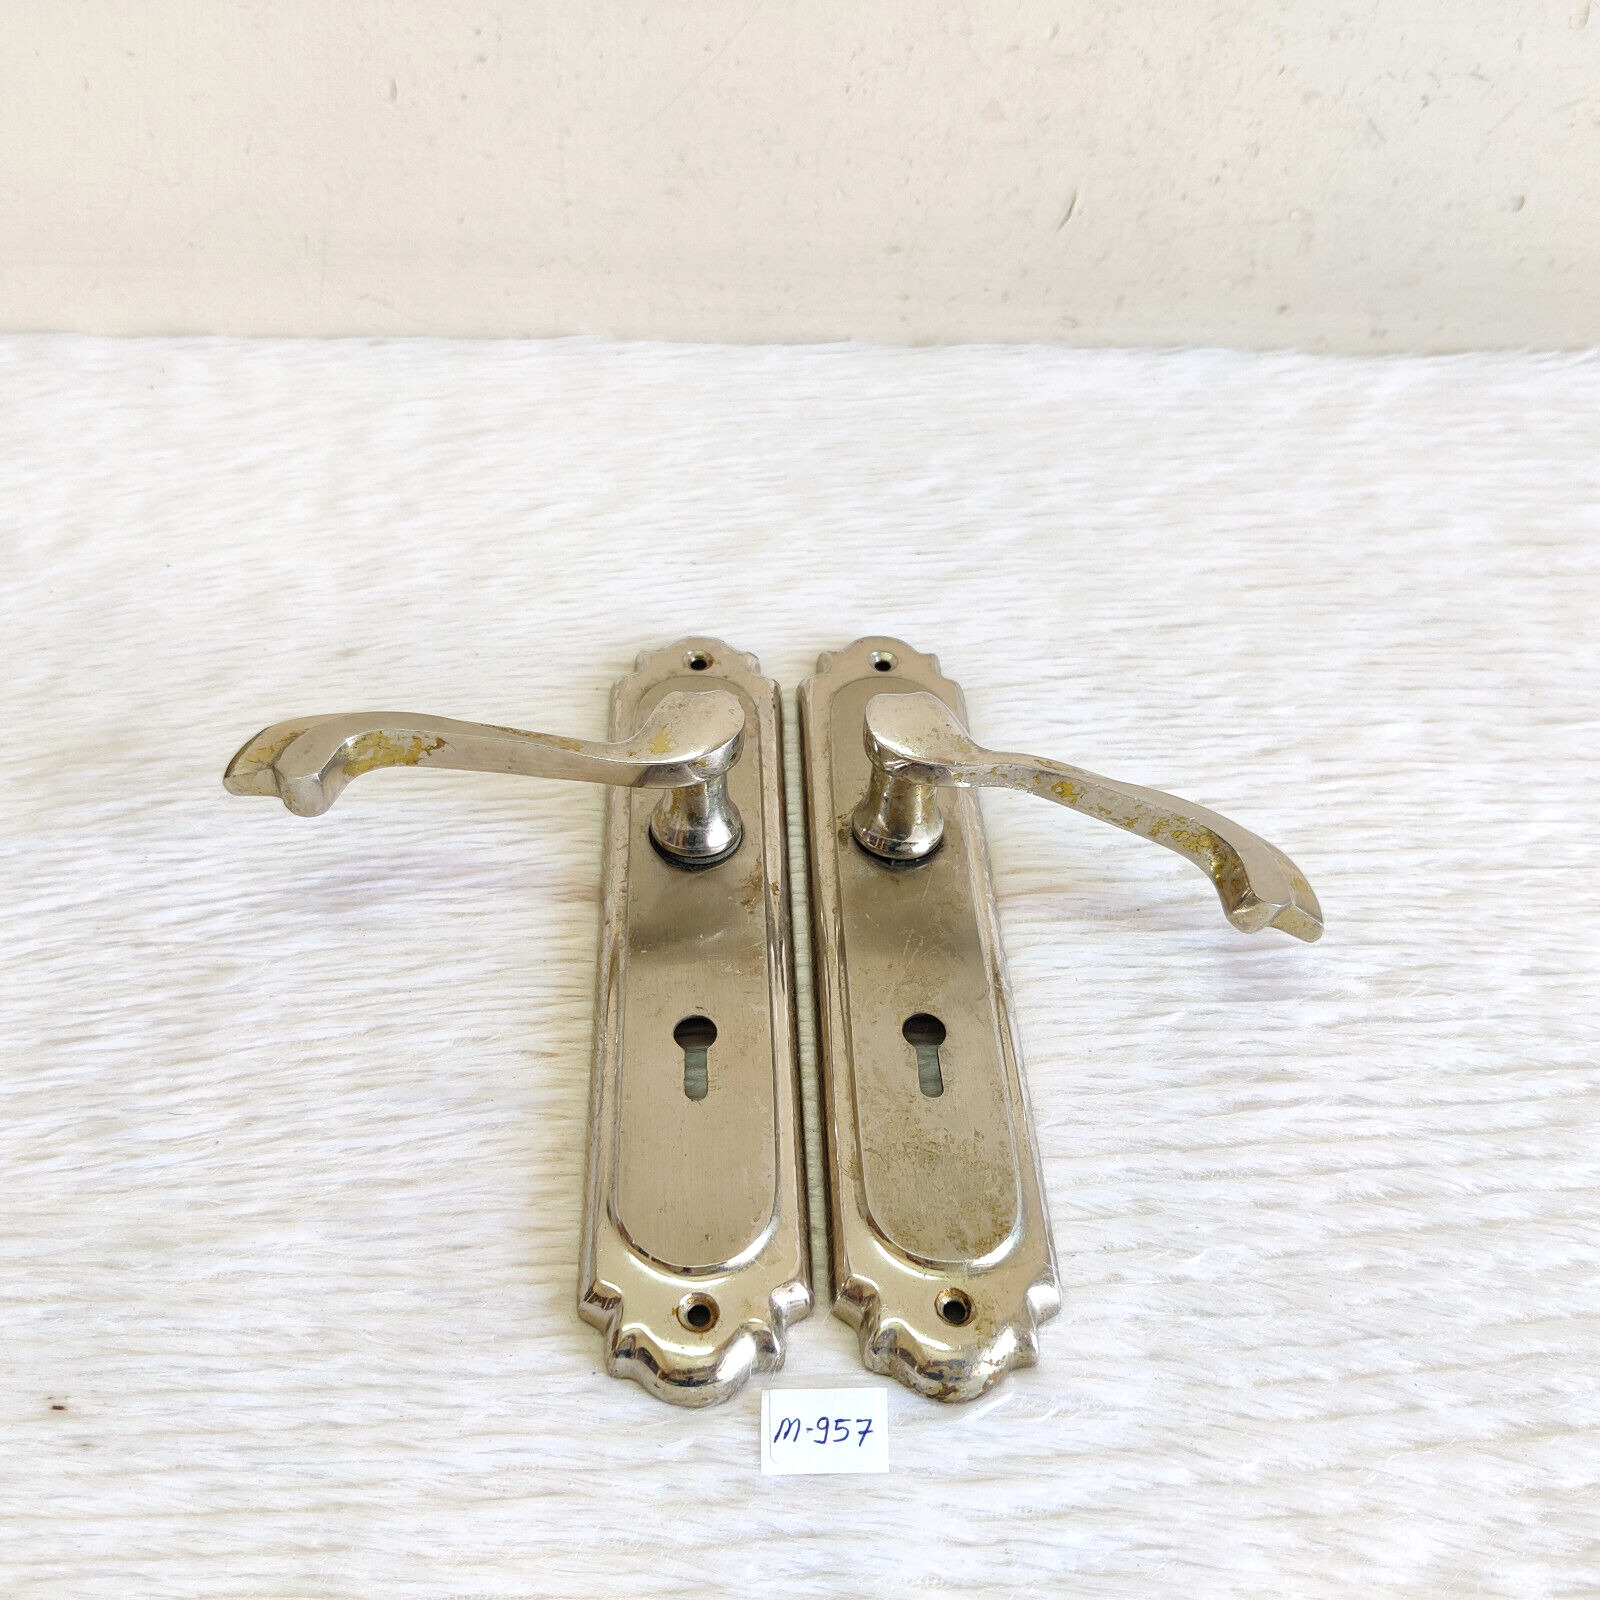 1930s Vintage Handcrafted Brass Door Lock Decorative Collectible Rare 2Pcs M957